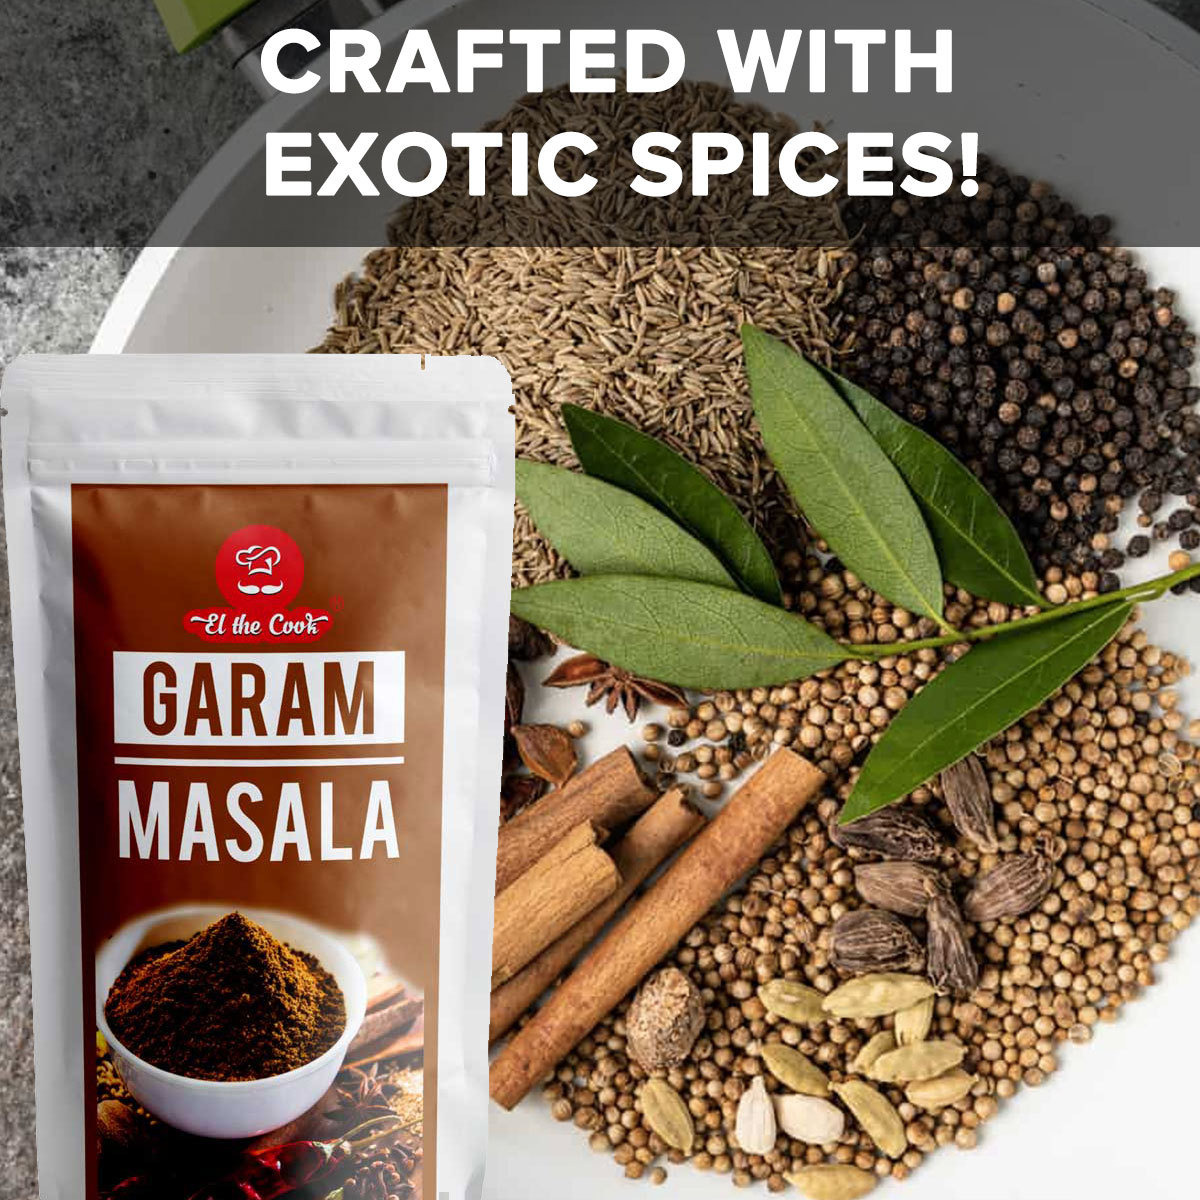 El The Cook Aromatic Garam Masala, Premium Indian Spice Blend, For Indian Dishes, 2.82oz, Vegan, Gluten-Free (Flavor: Garam Masala)